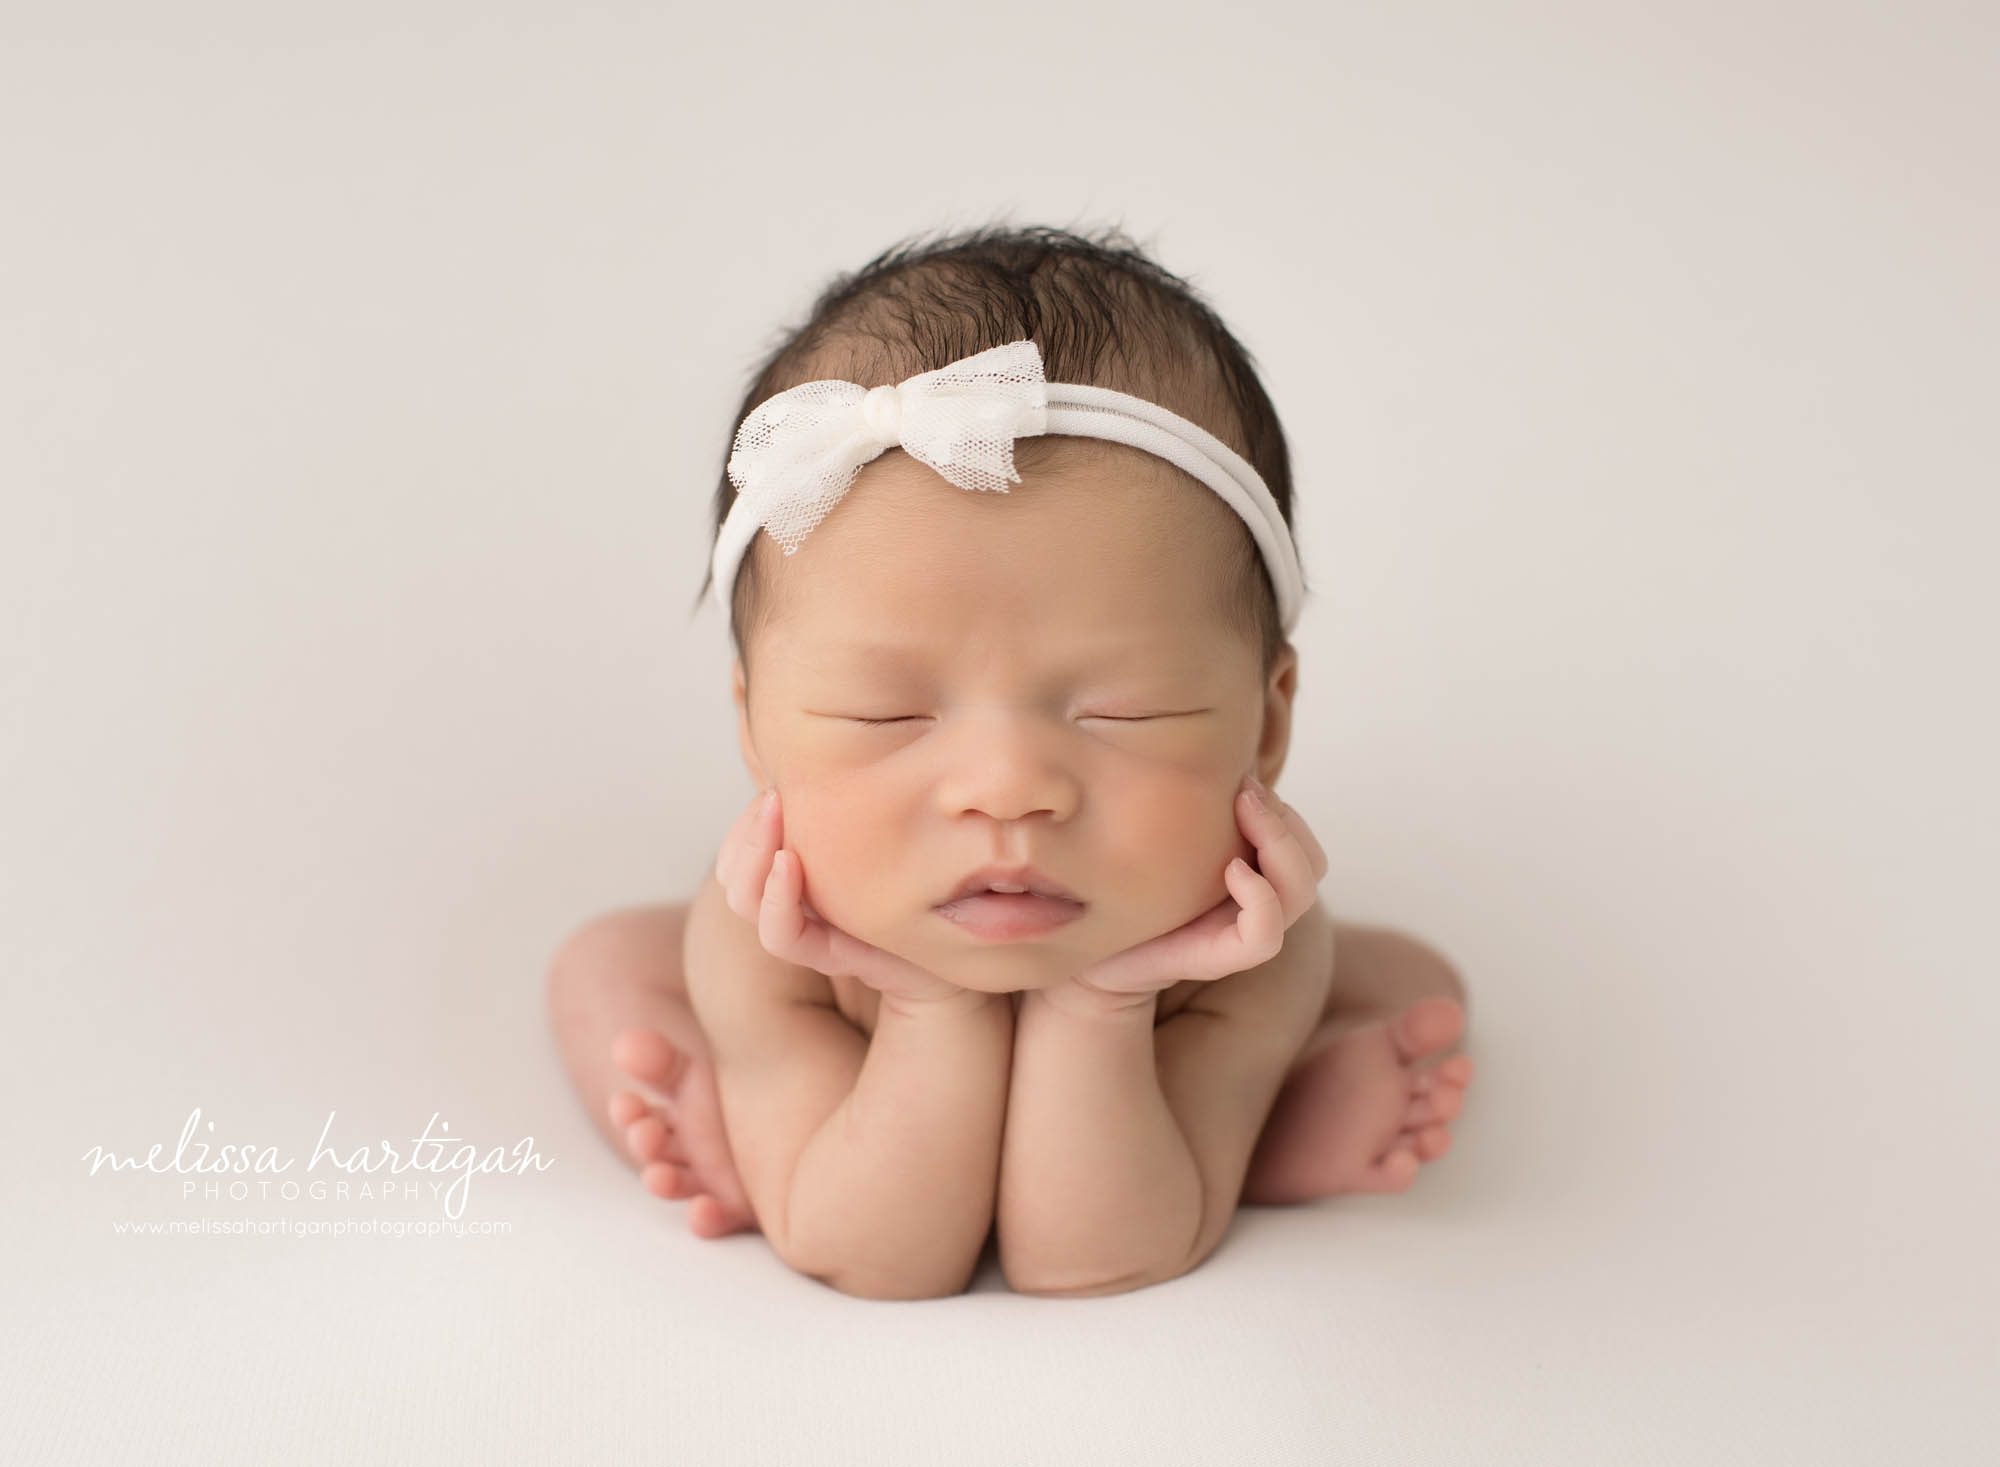 newborn baby girl posed froggy pose on white backdrop wearing white bow headband